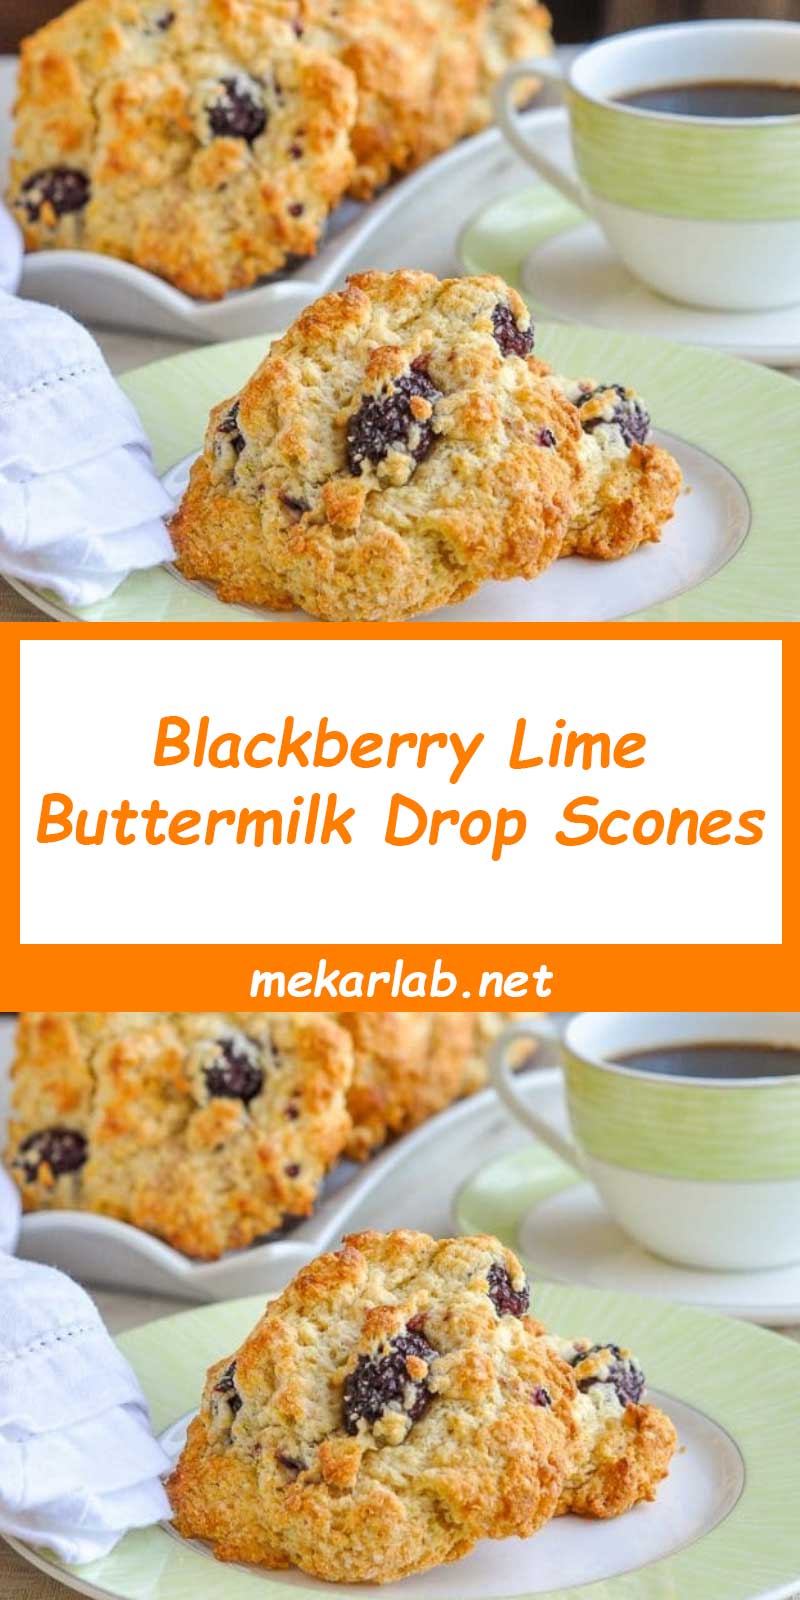 Blackberry Lime Buttermilk Drop Scones